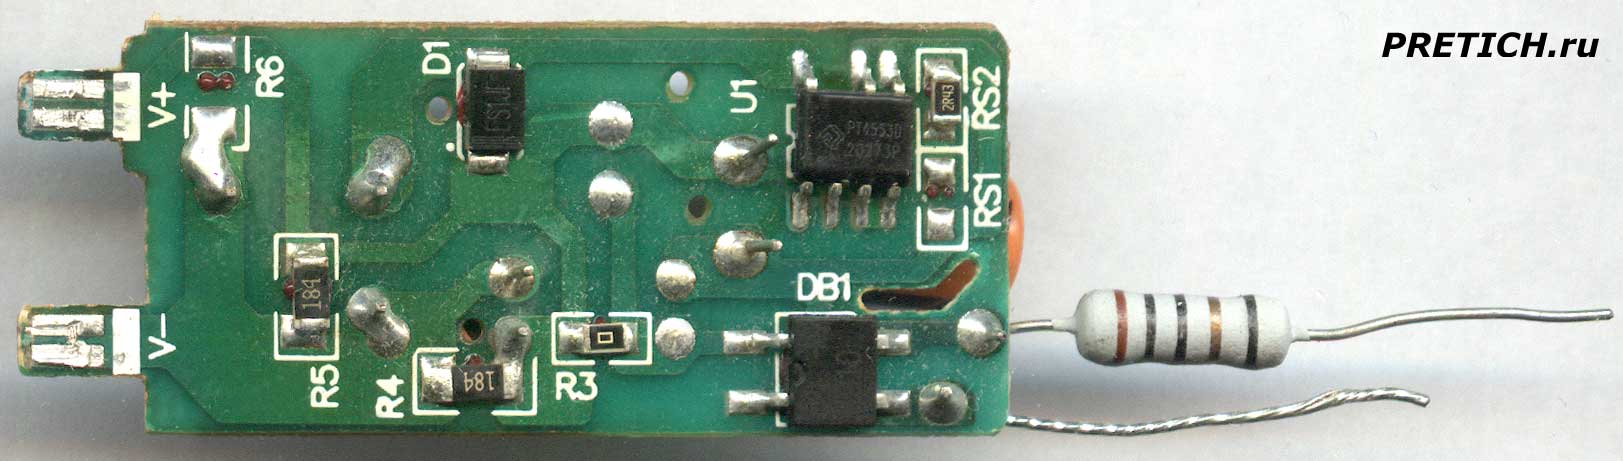 PT4553D схема и ремонт драйвера лампочки ЭРА LED A60-15W-860-E27